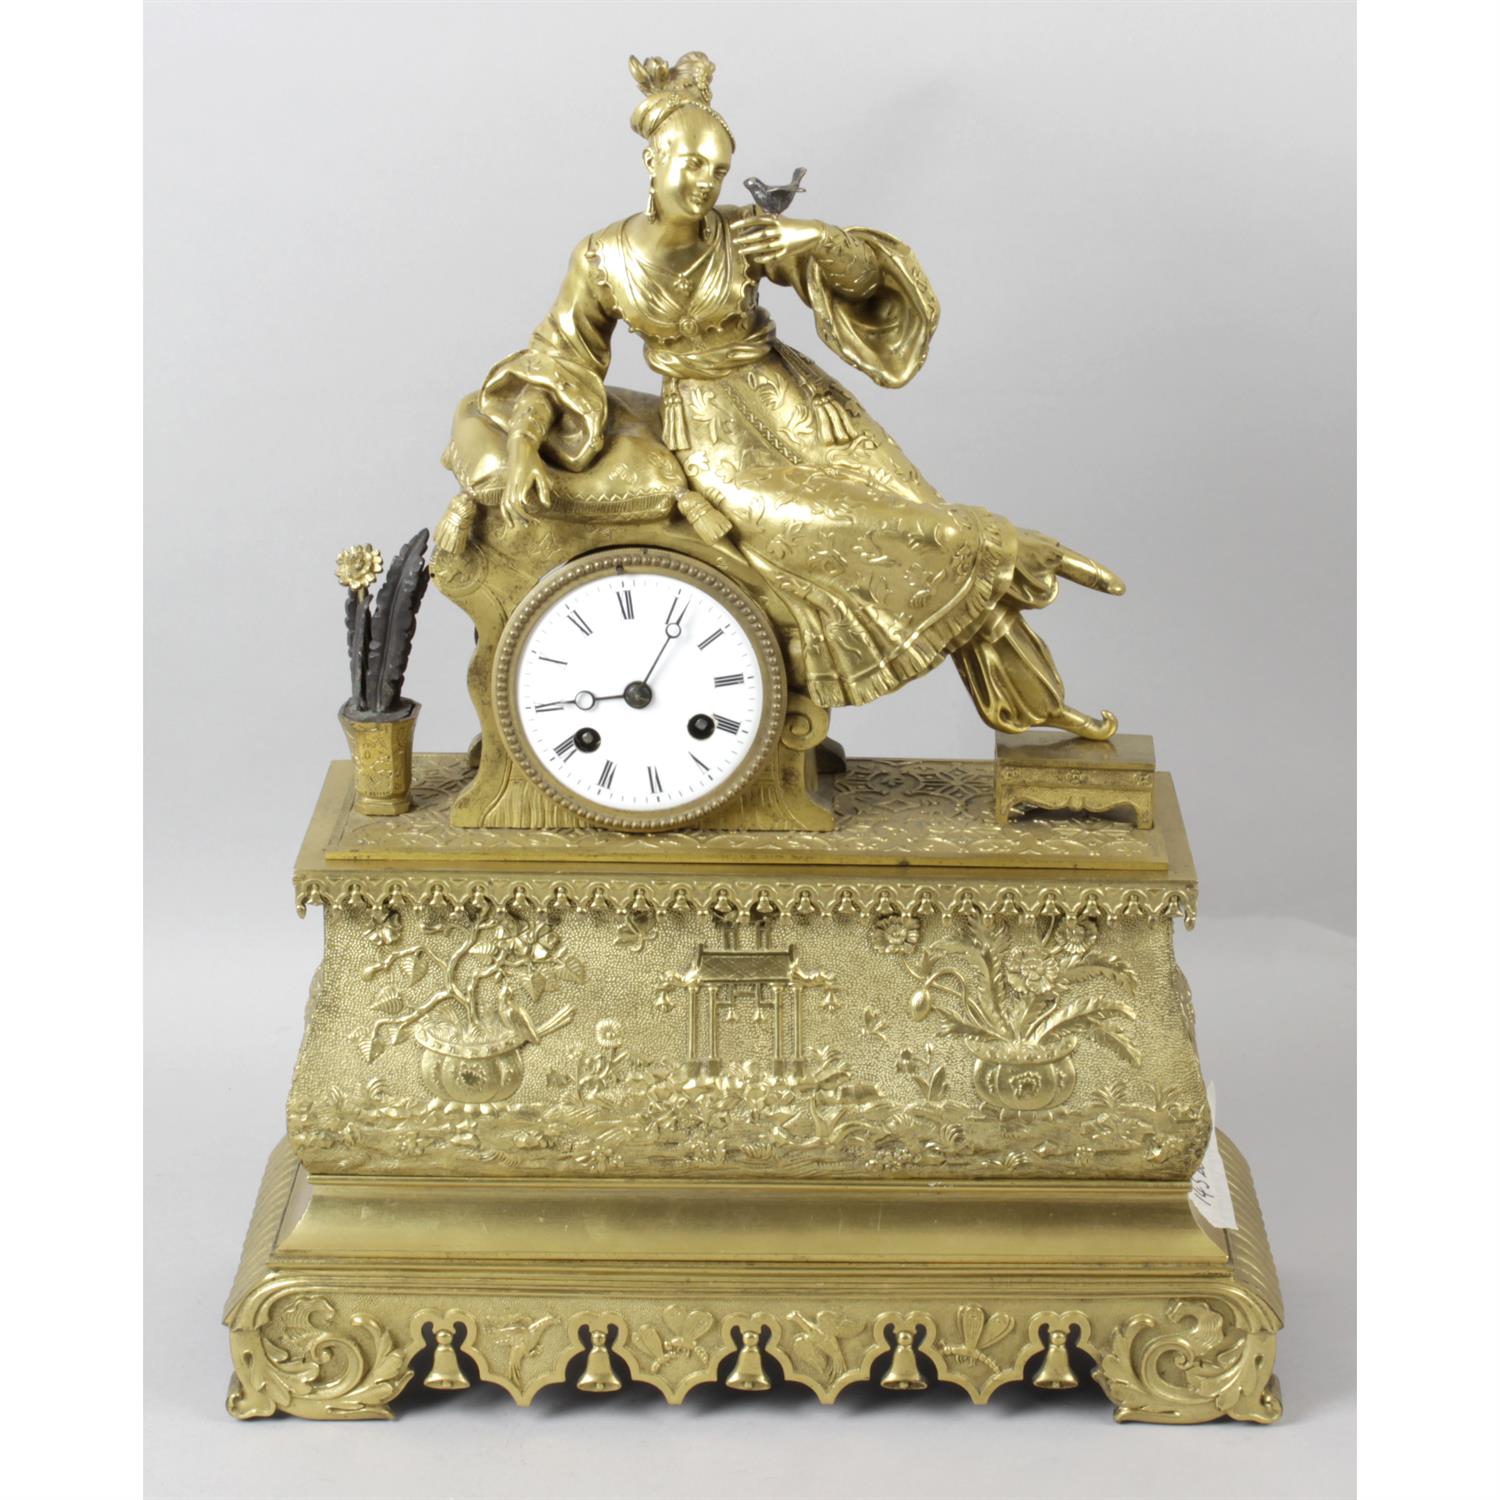 A 19th century bronze and gilt bronze cased mantel clock.